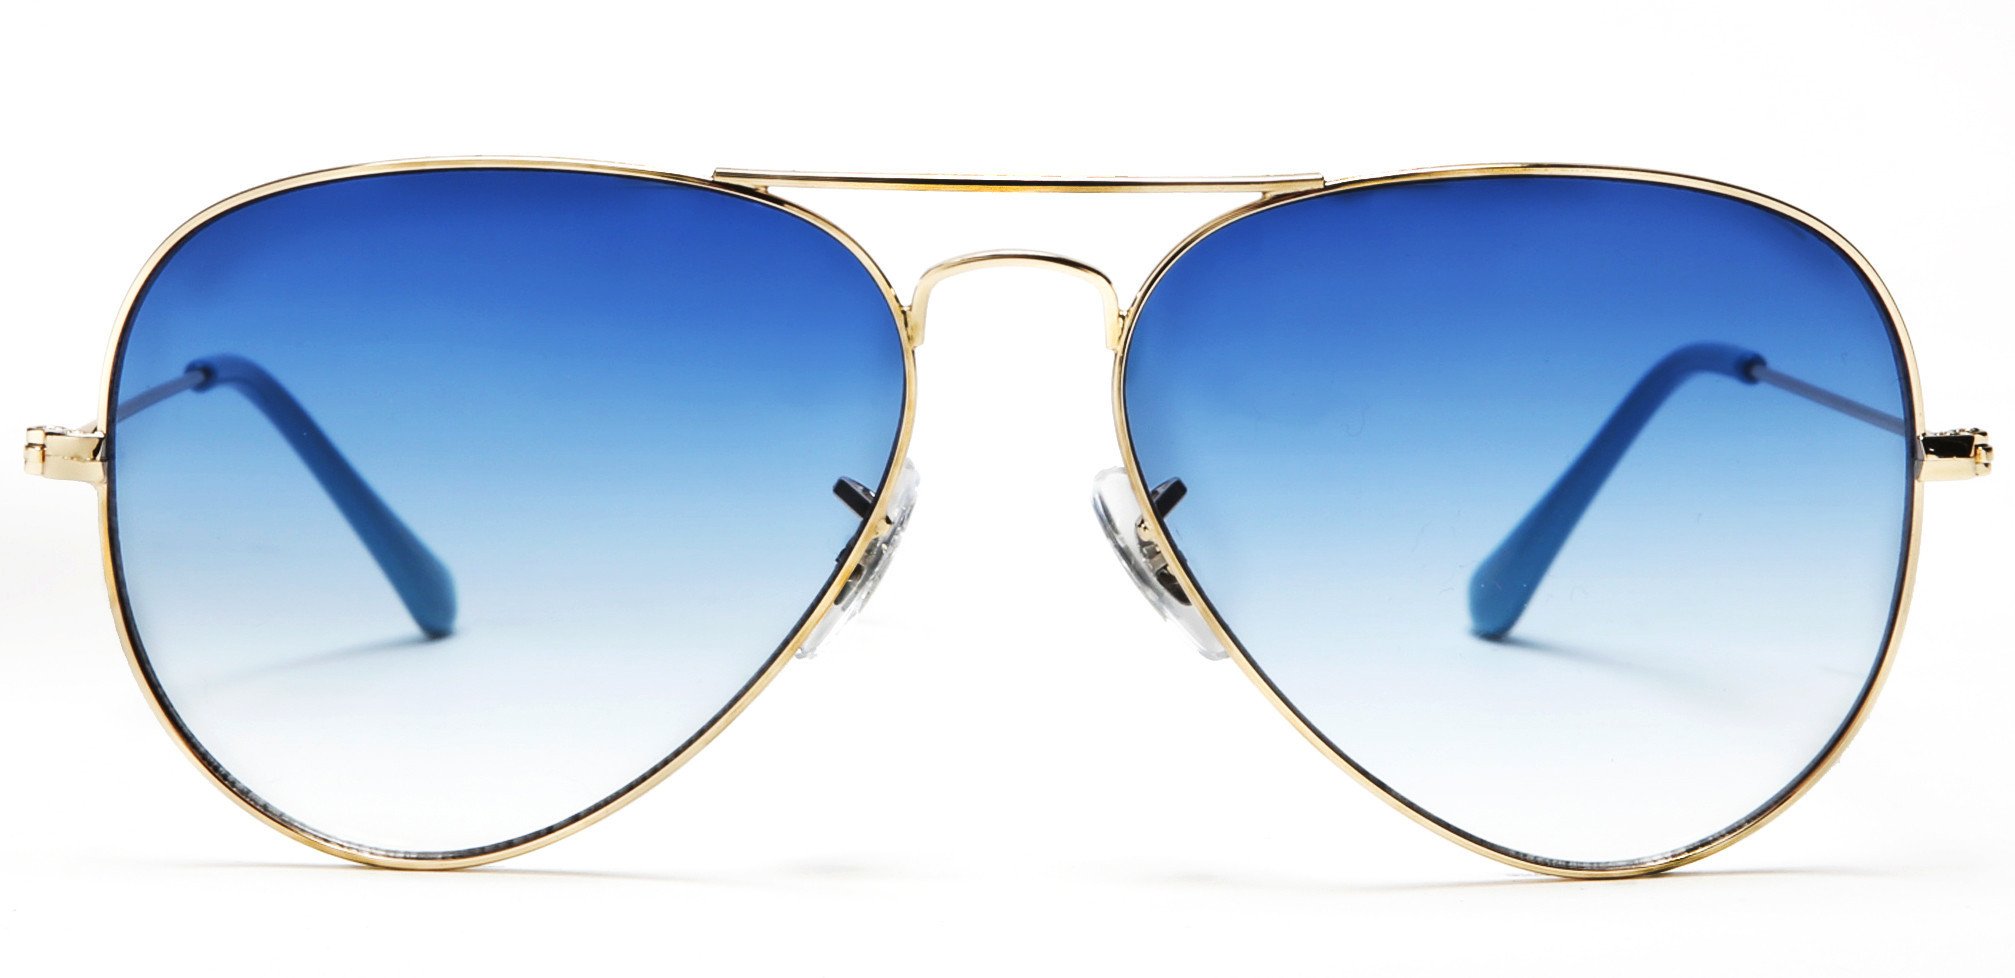 Classic Brow Bar Semi-Rimless Colored Mirror Lens Aviator Sunglasses 57mm